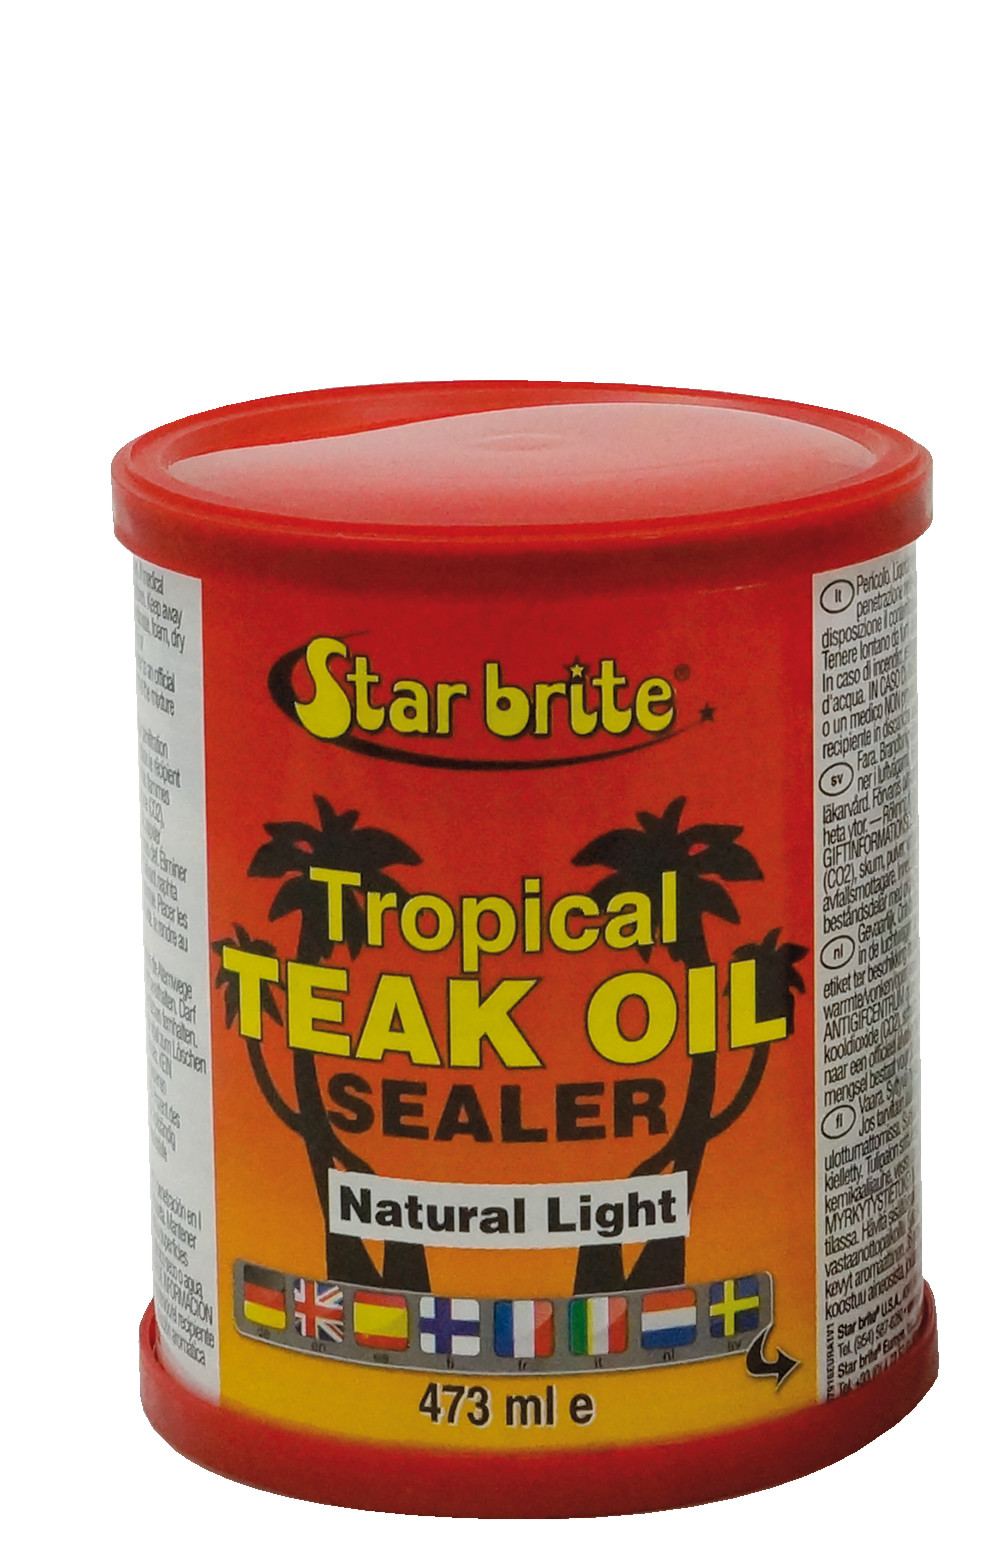 Tropical Teak oil sealer, Natural Light